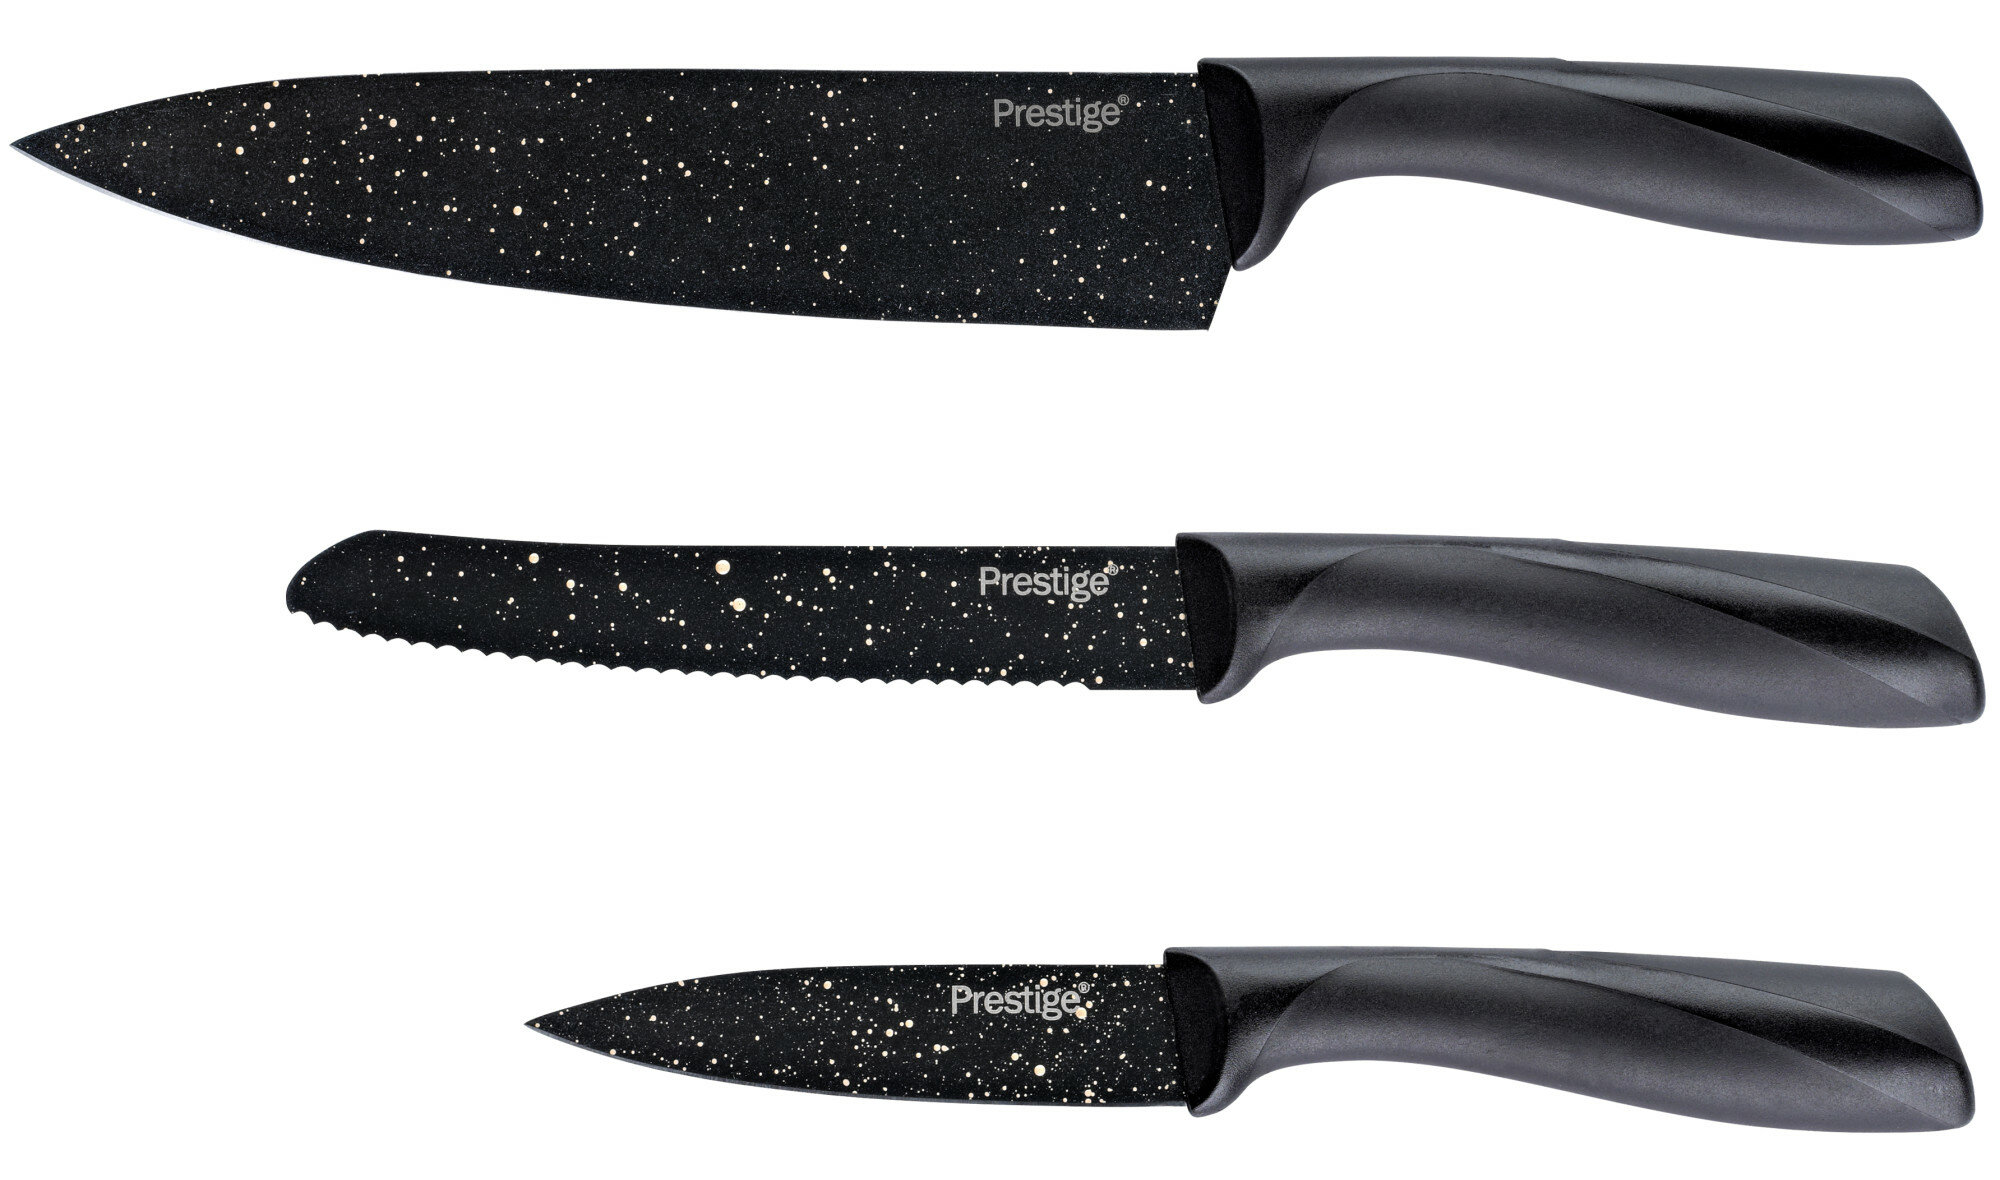 PurpleChef 10 Piece Stainless Steel Assorted Knife Set & Reviews